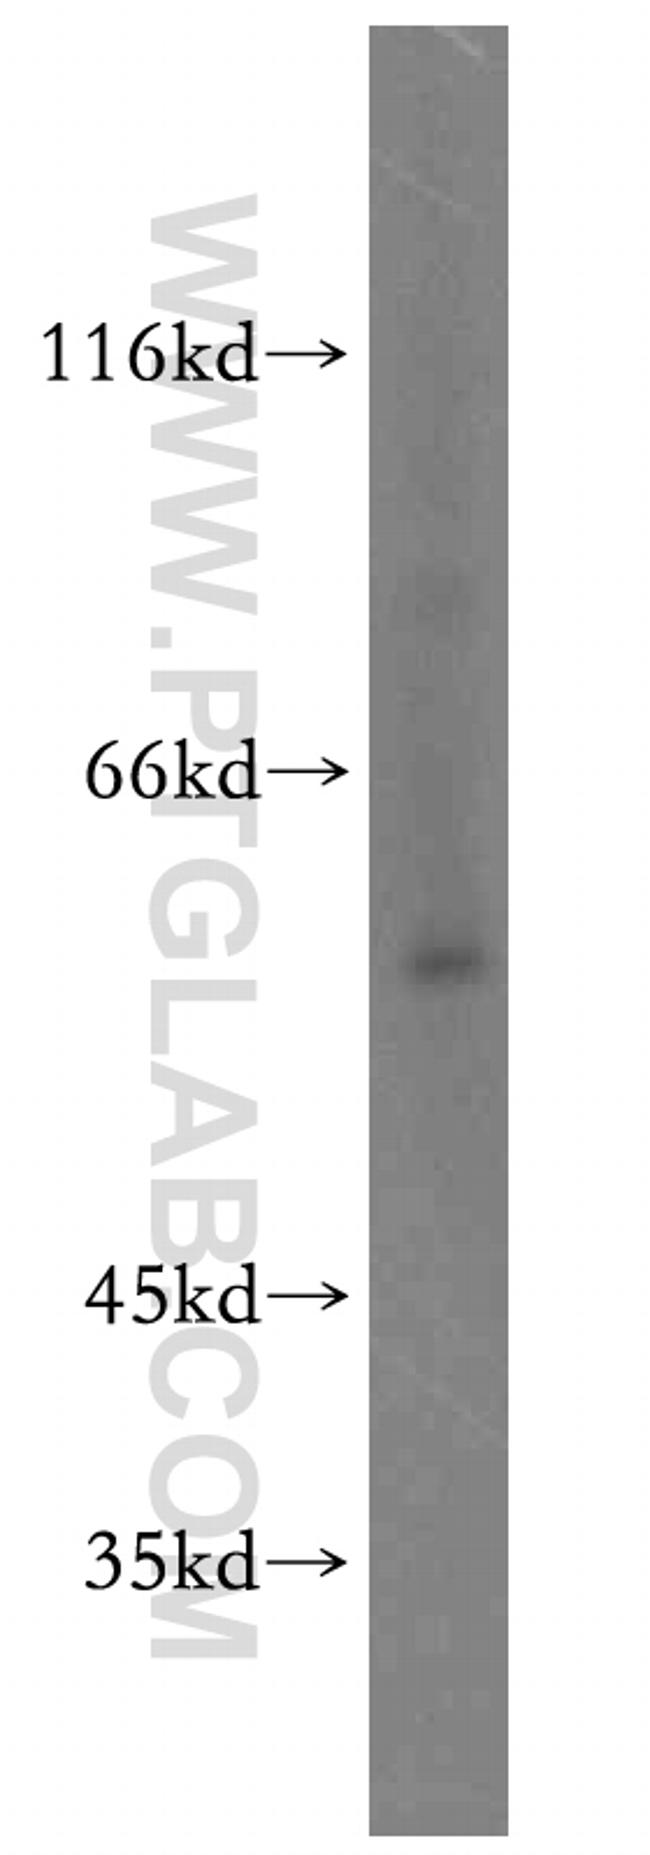 HCK Antibody in Western Blot (WB)